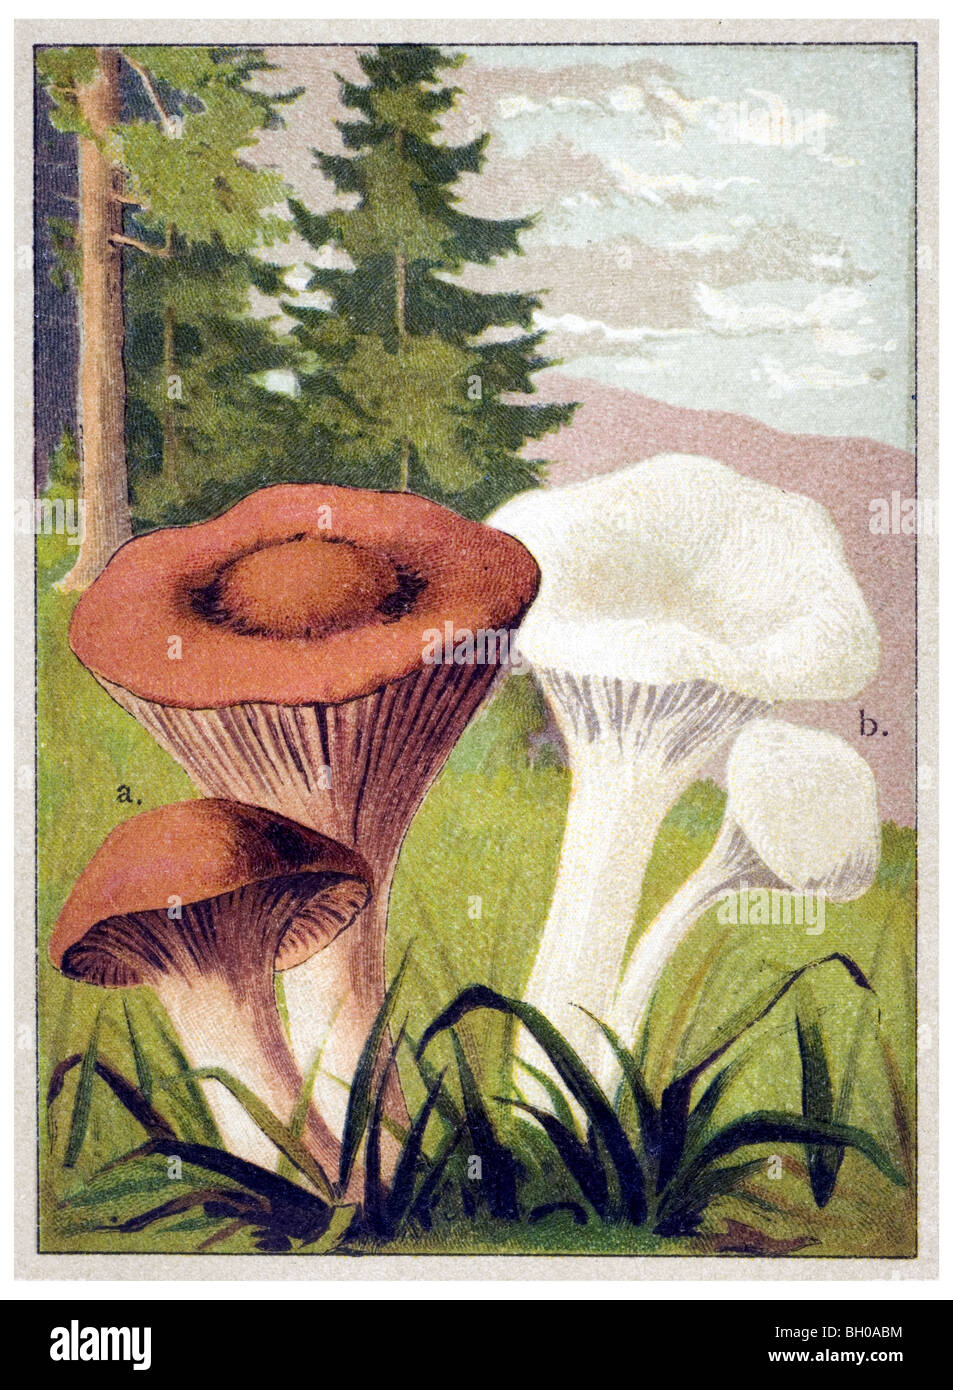 buffcap, meadow waxcap, mushroom fungus Stock Photo